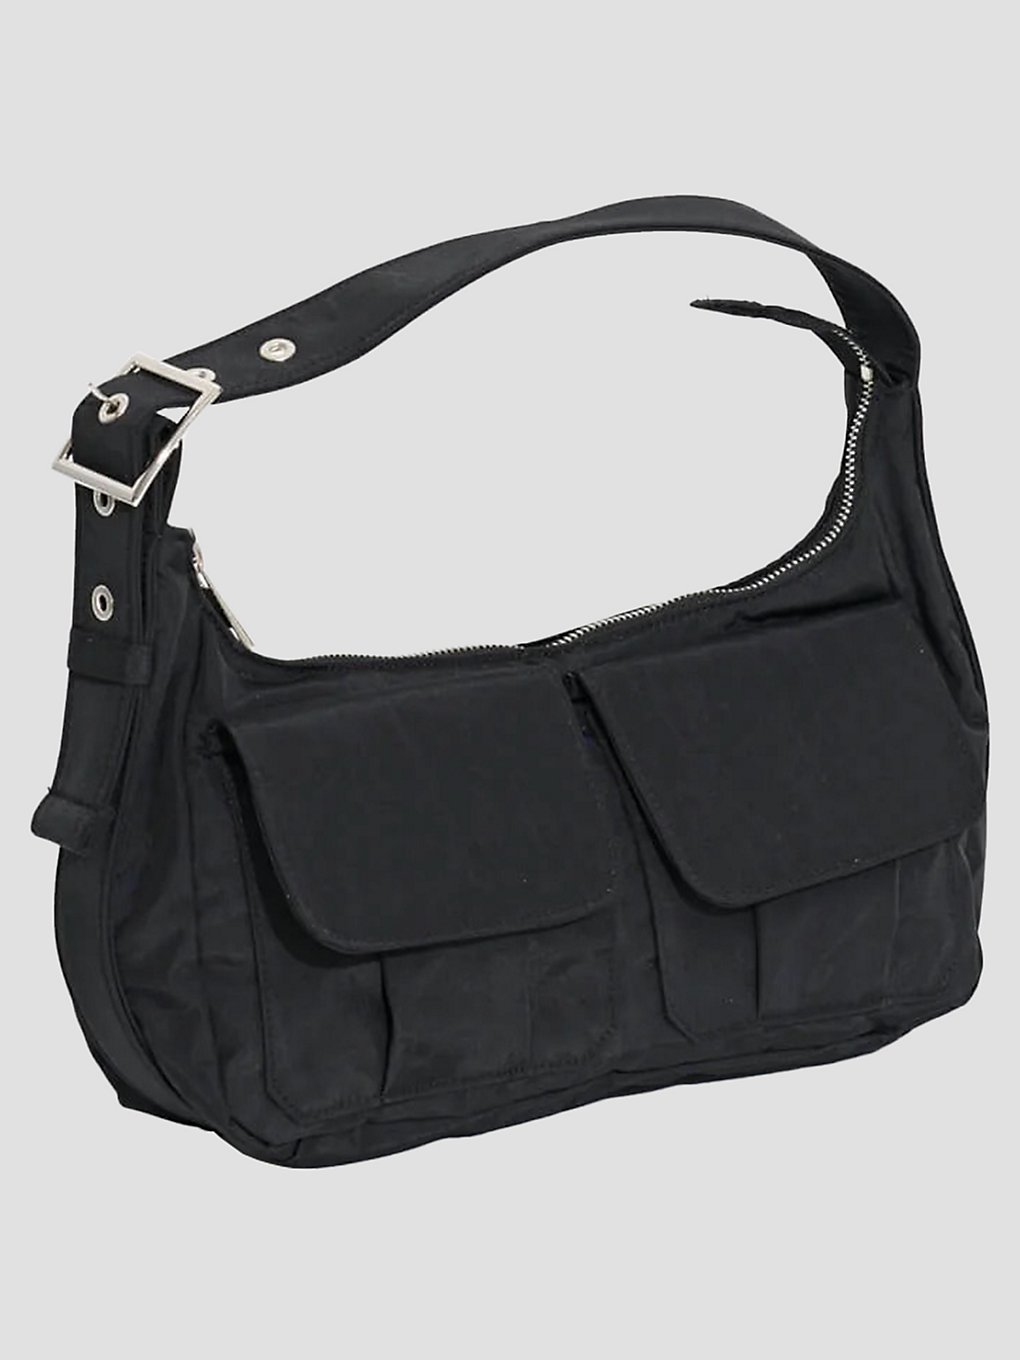 Misfit Shapes Aquarius Shoulder Handtasche black kaufen